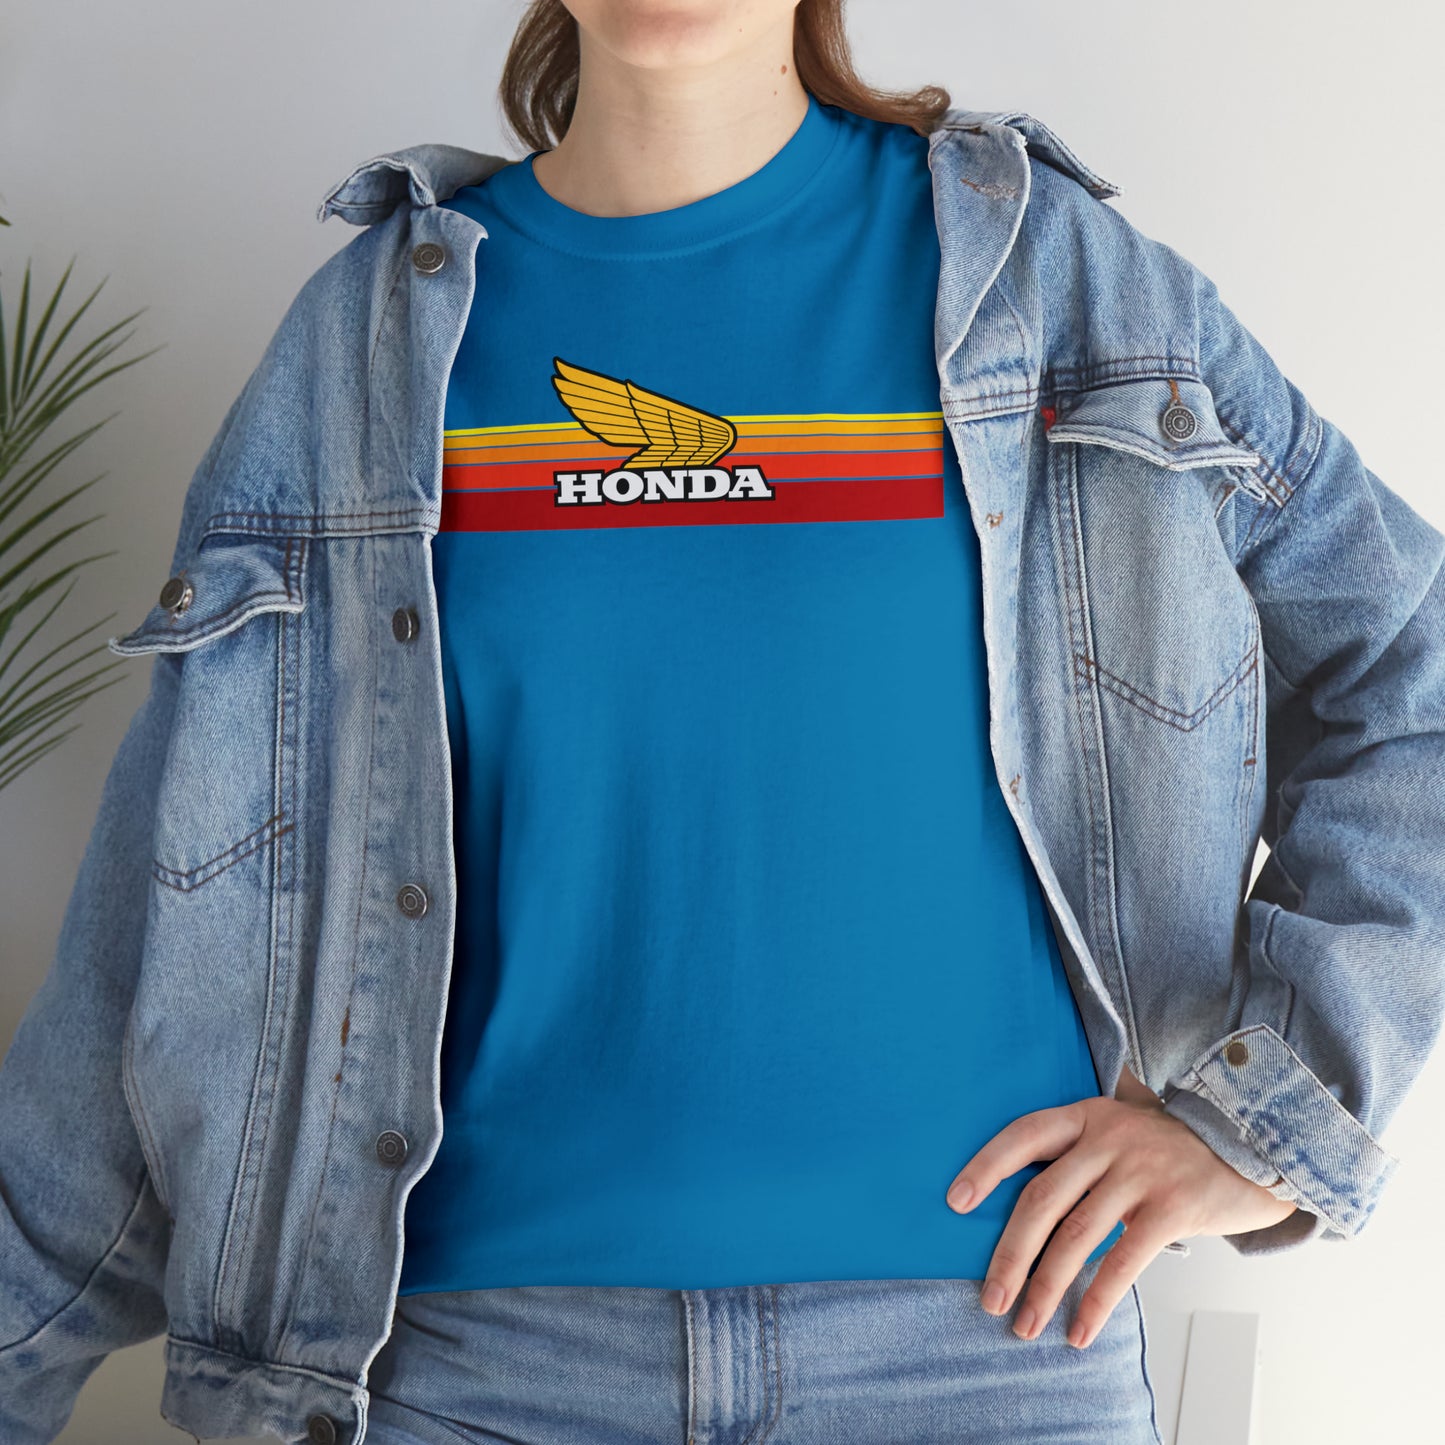 Honda T-Shirt